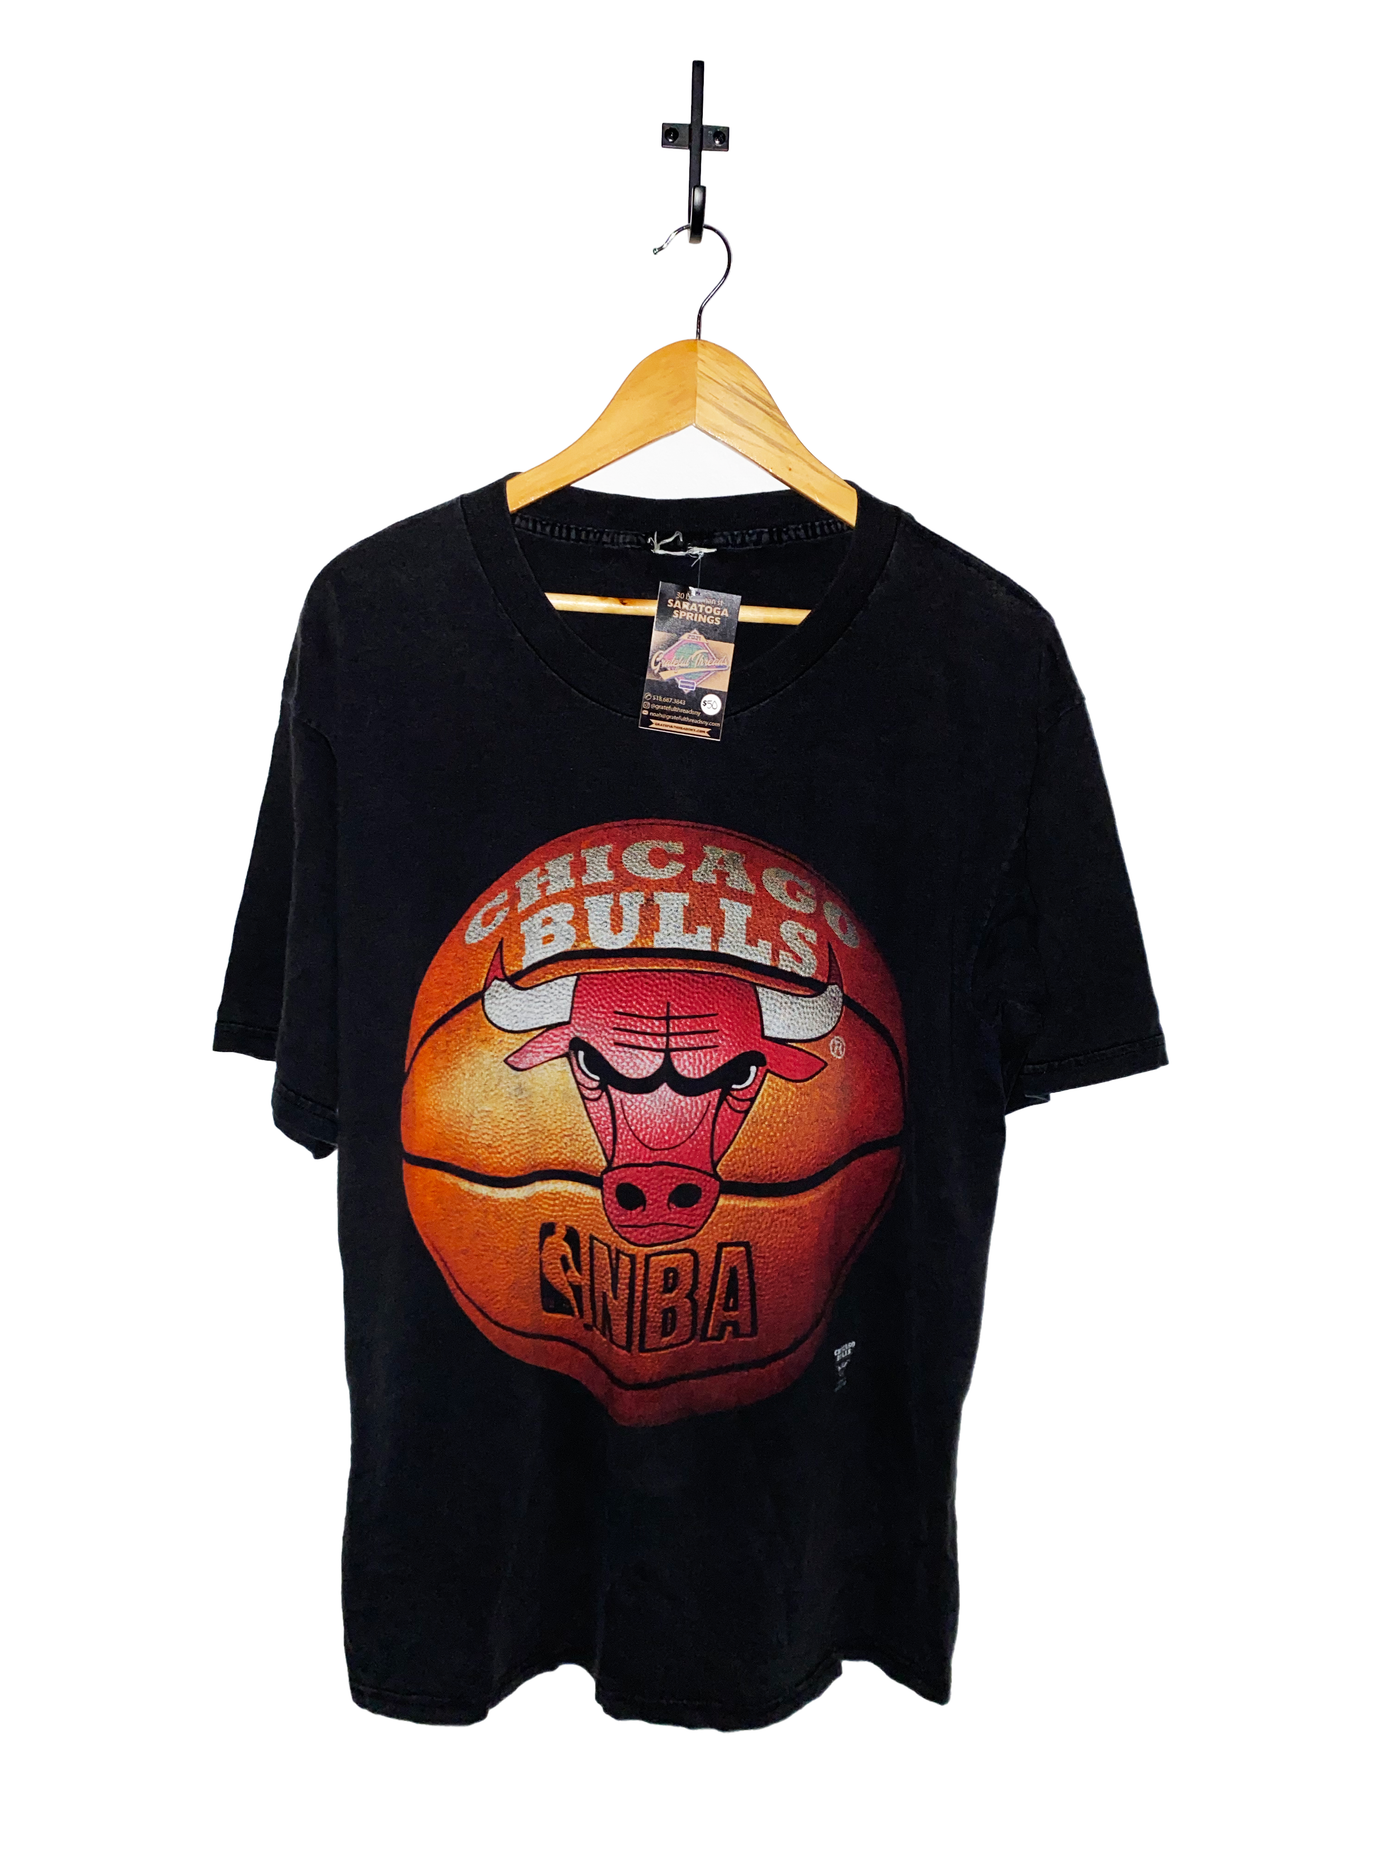 Vintage 90s Chicago Bulls T-Shirt